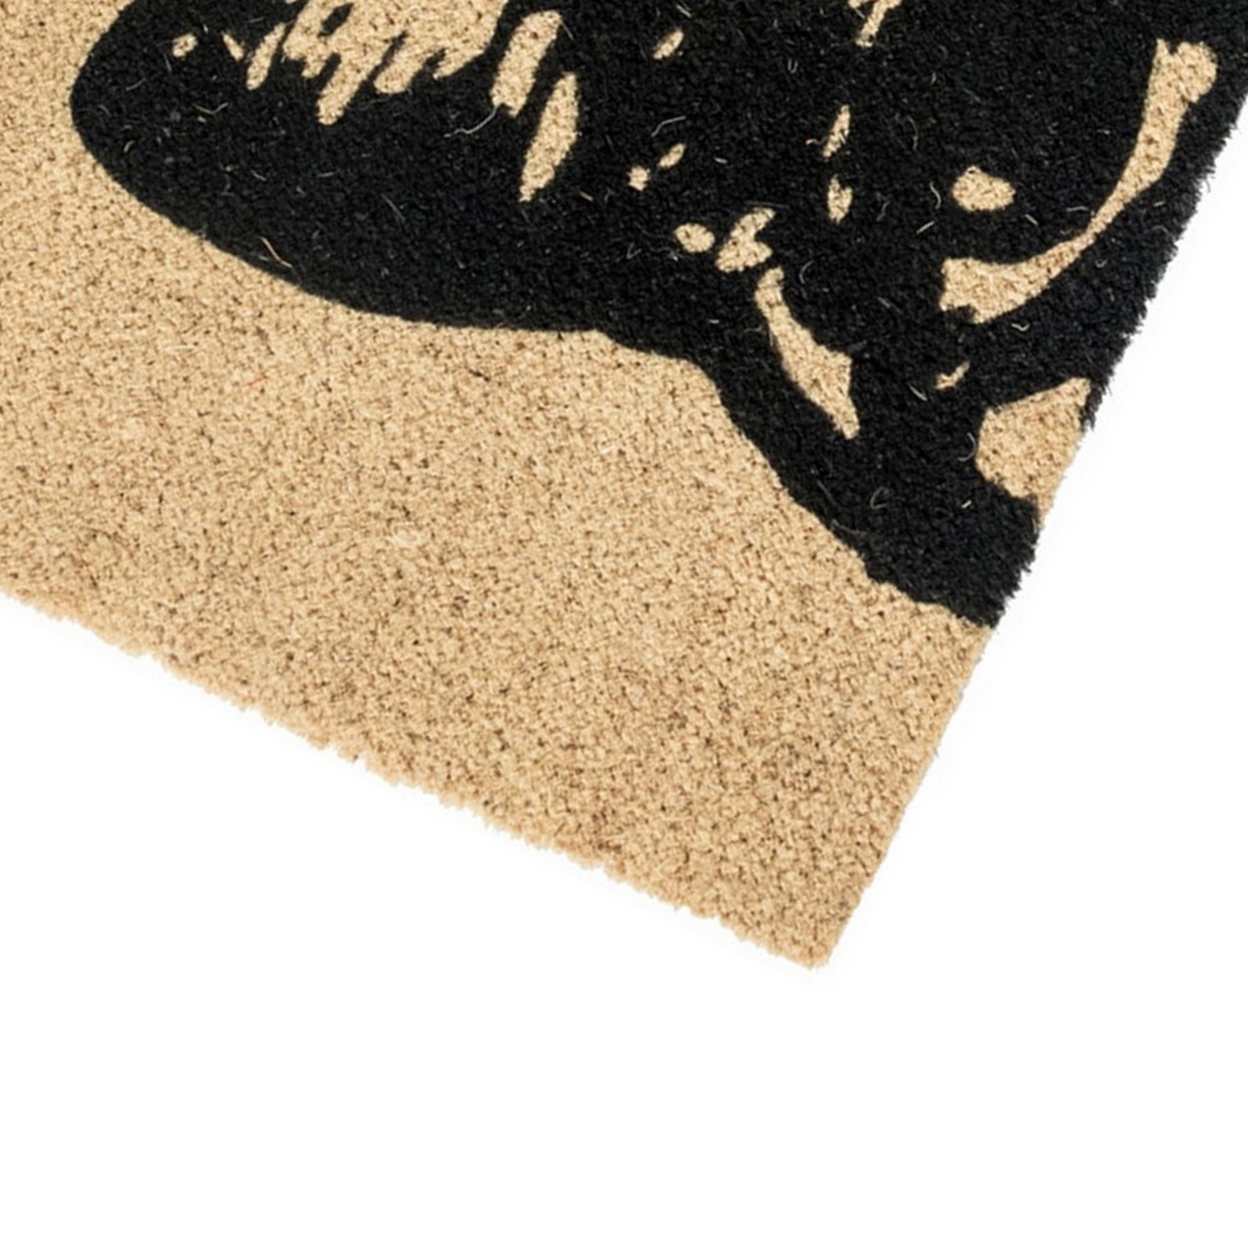 24 X 36 Machine Made Coir Doormat, Black Cat Print Design, Ivory Taupe Base- Saltoro Sherpi